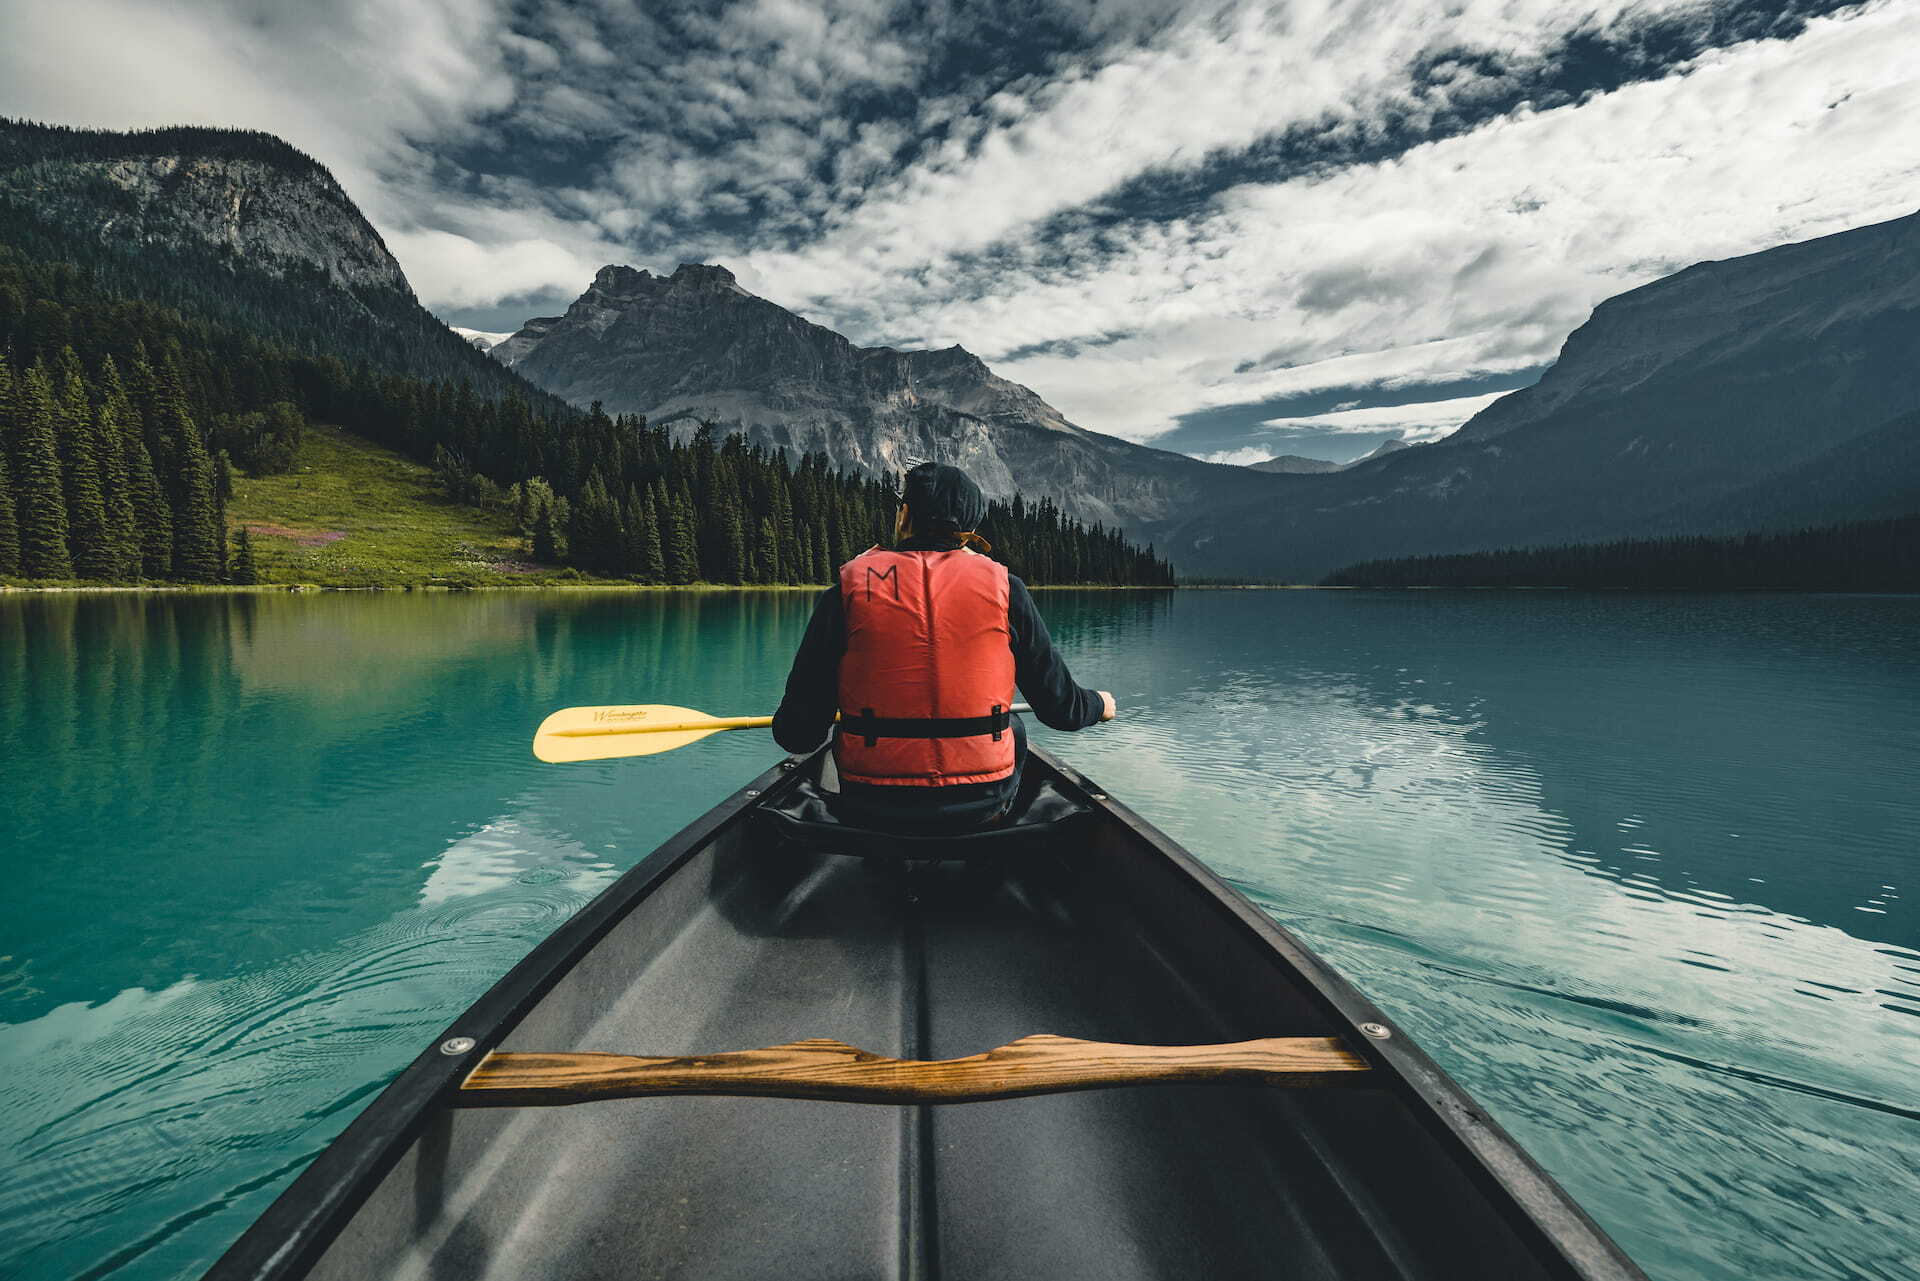 Canoeing on Emerald Lake in Yoho National Park BC.